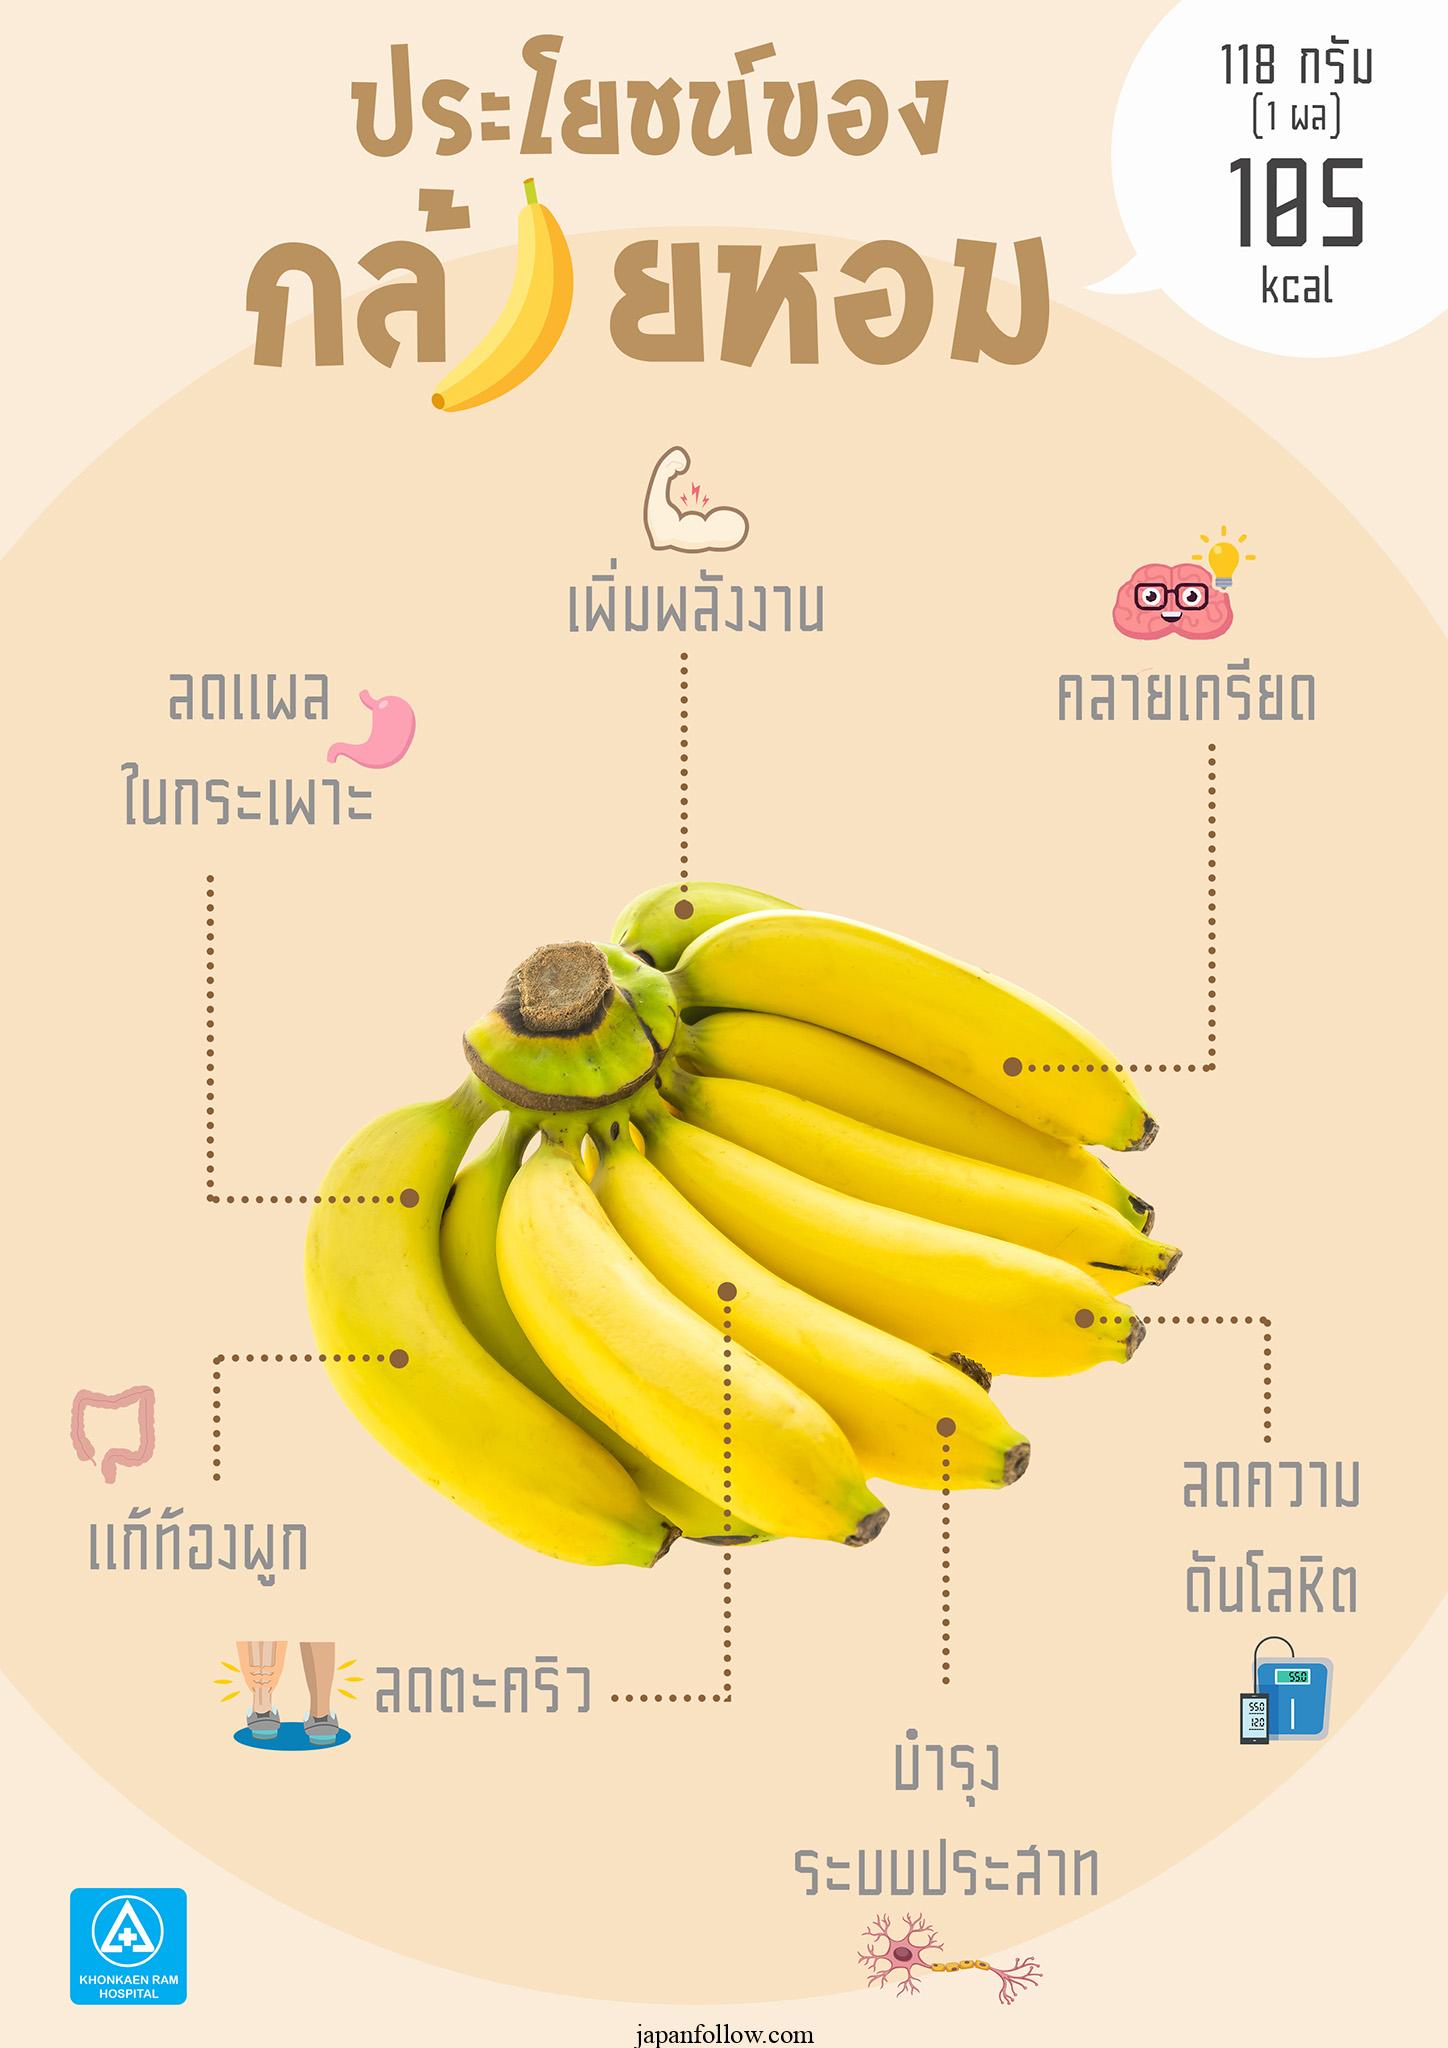 Avantages des bananes